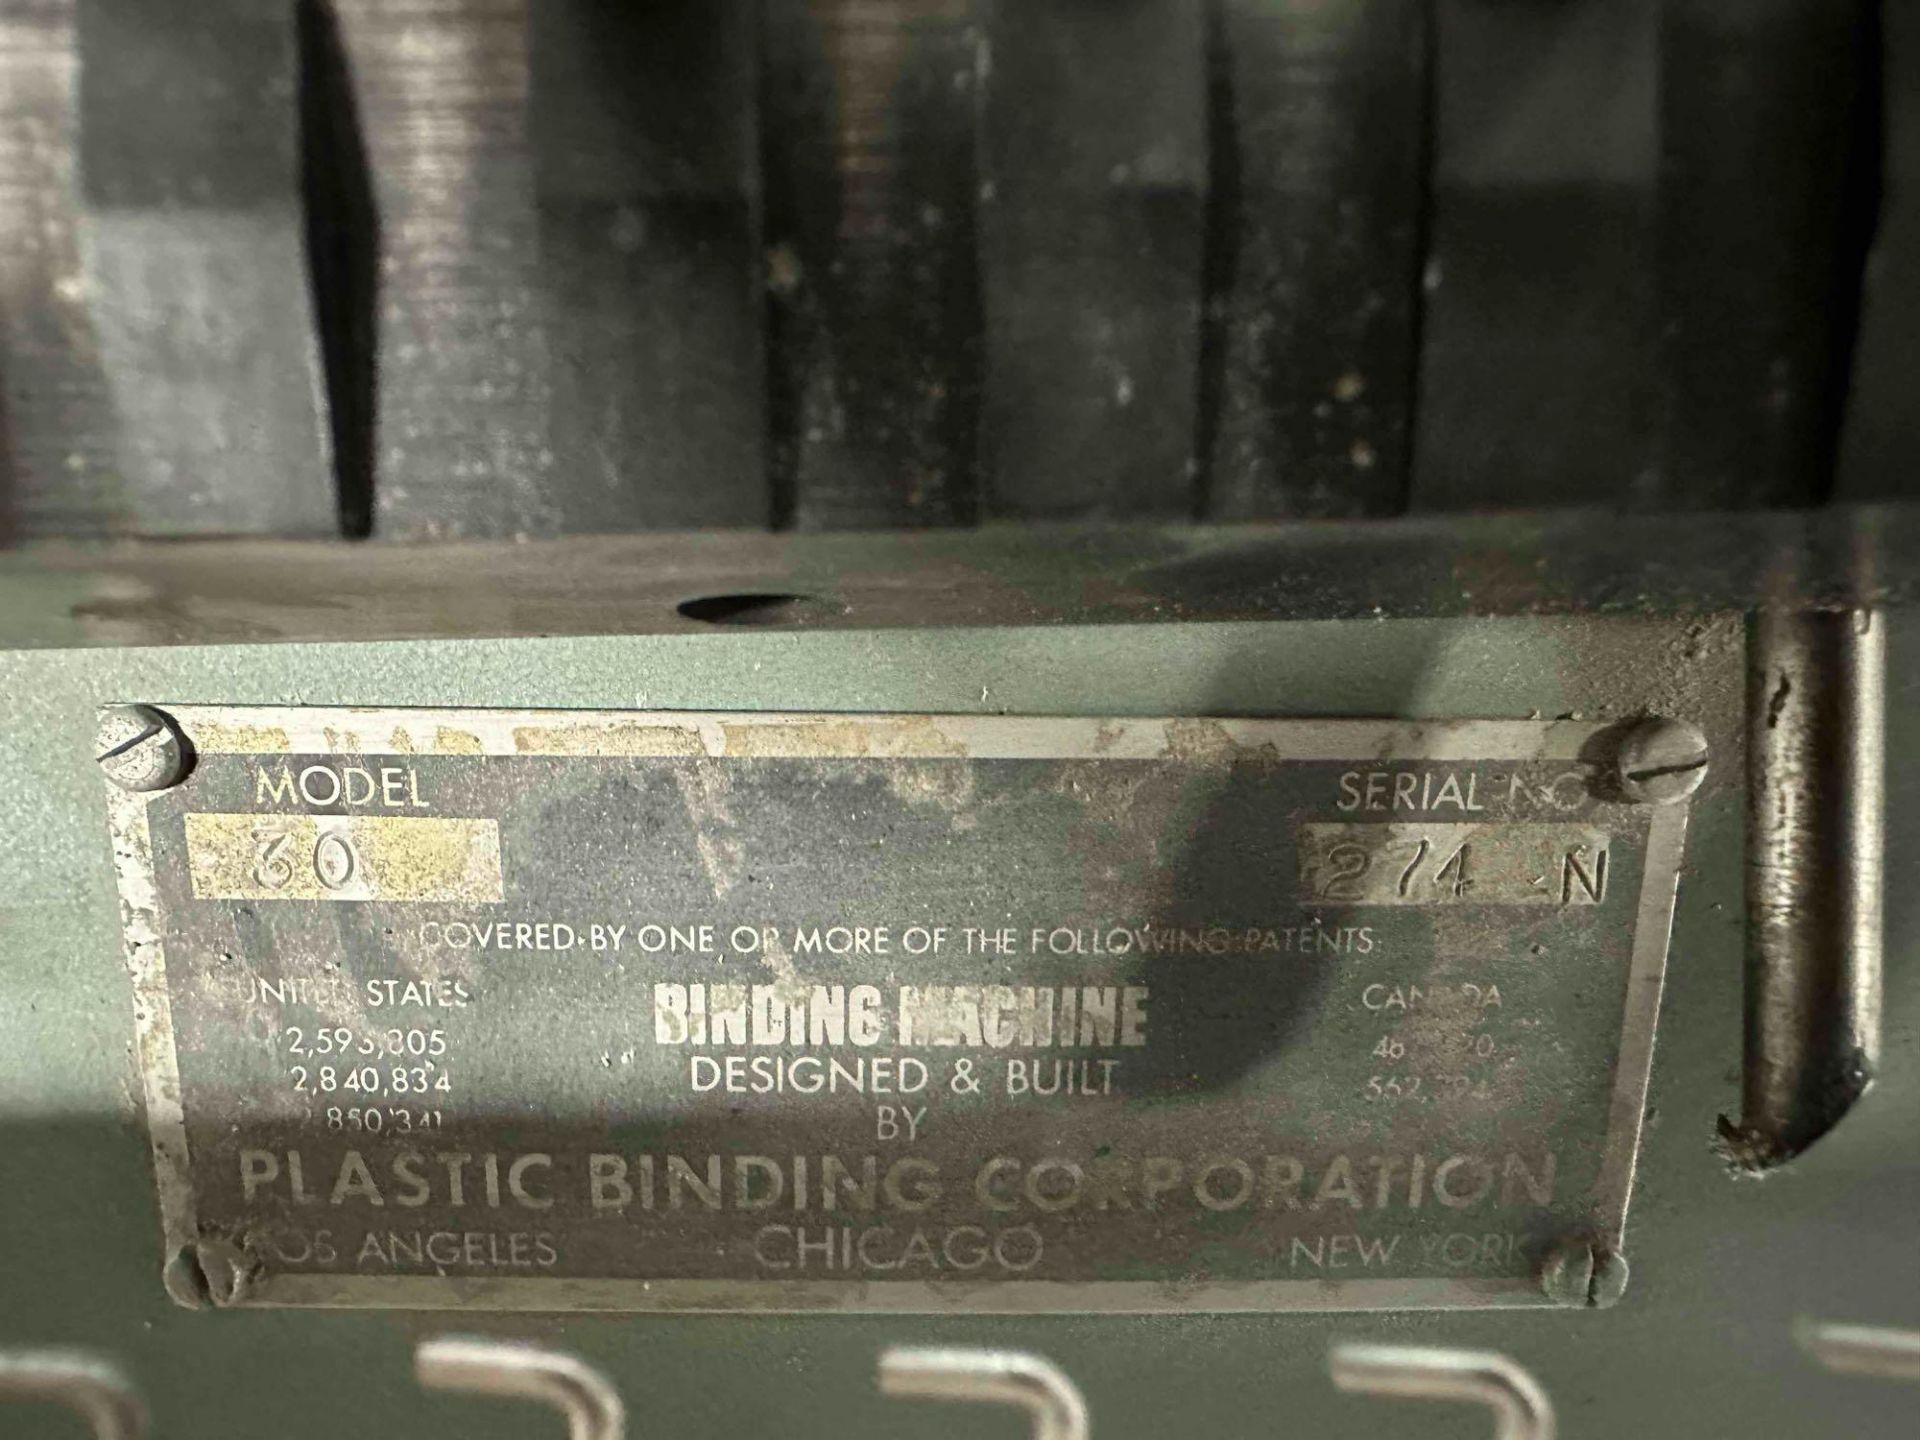 Plastic Binding Corporation Binding Machine - model 30 - Image 6 of 6